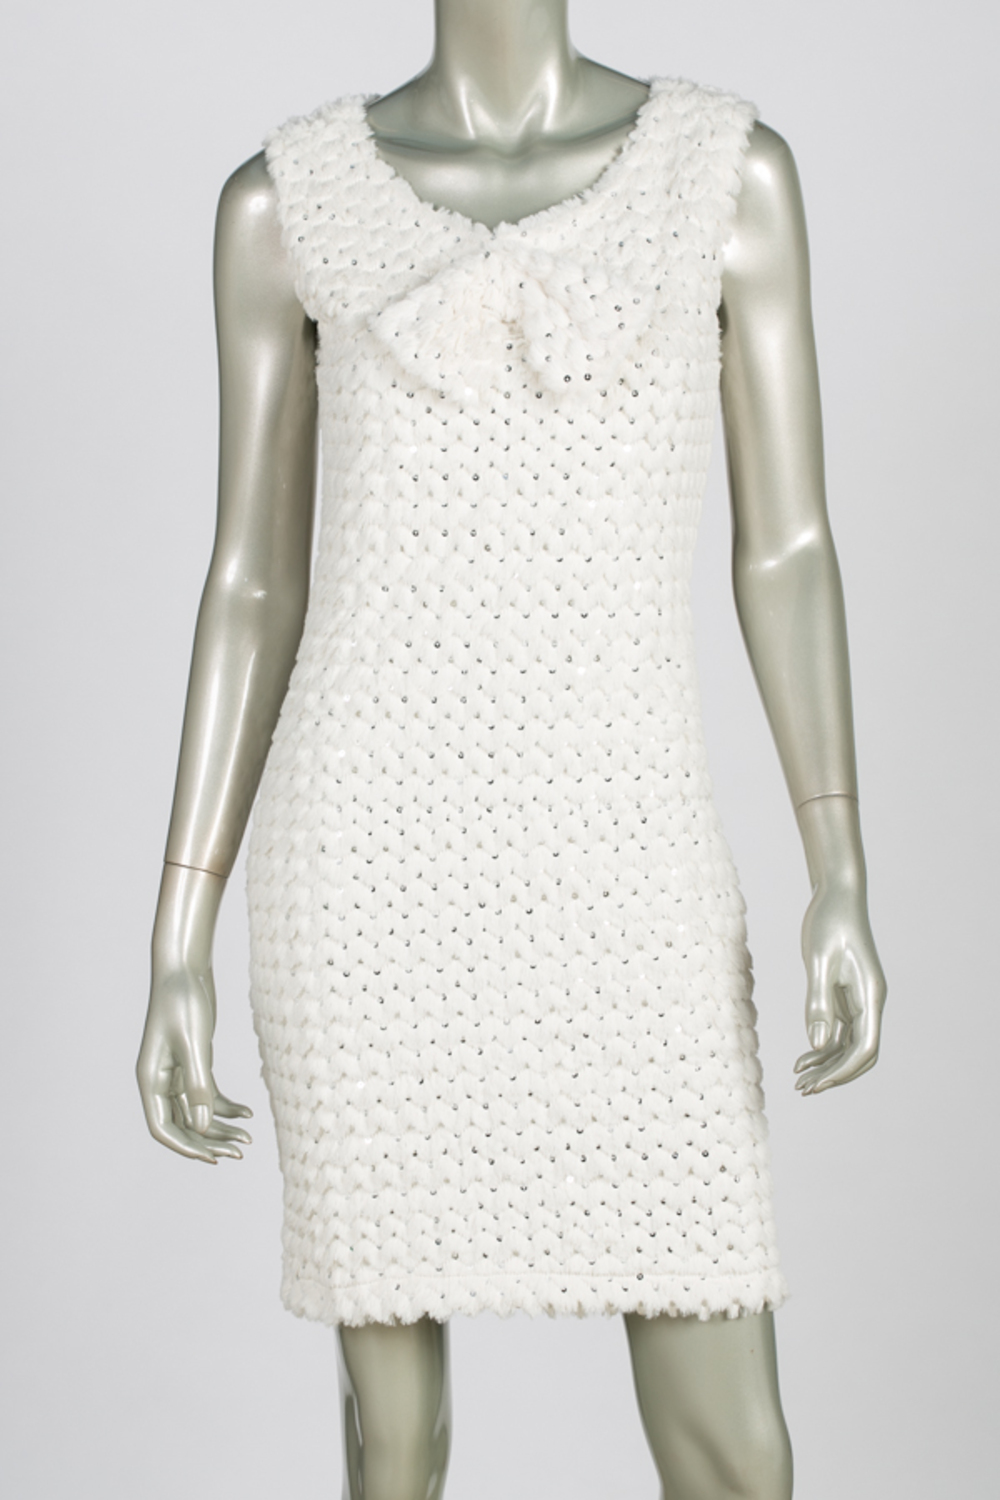 Joseph Ribkoff dress style 144847. White